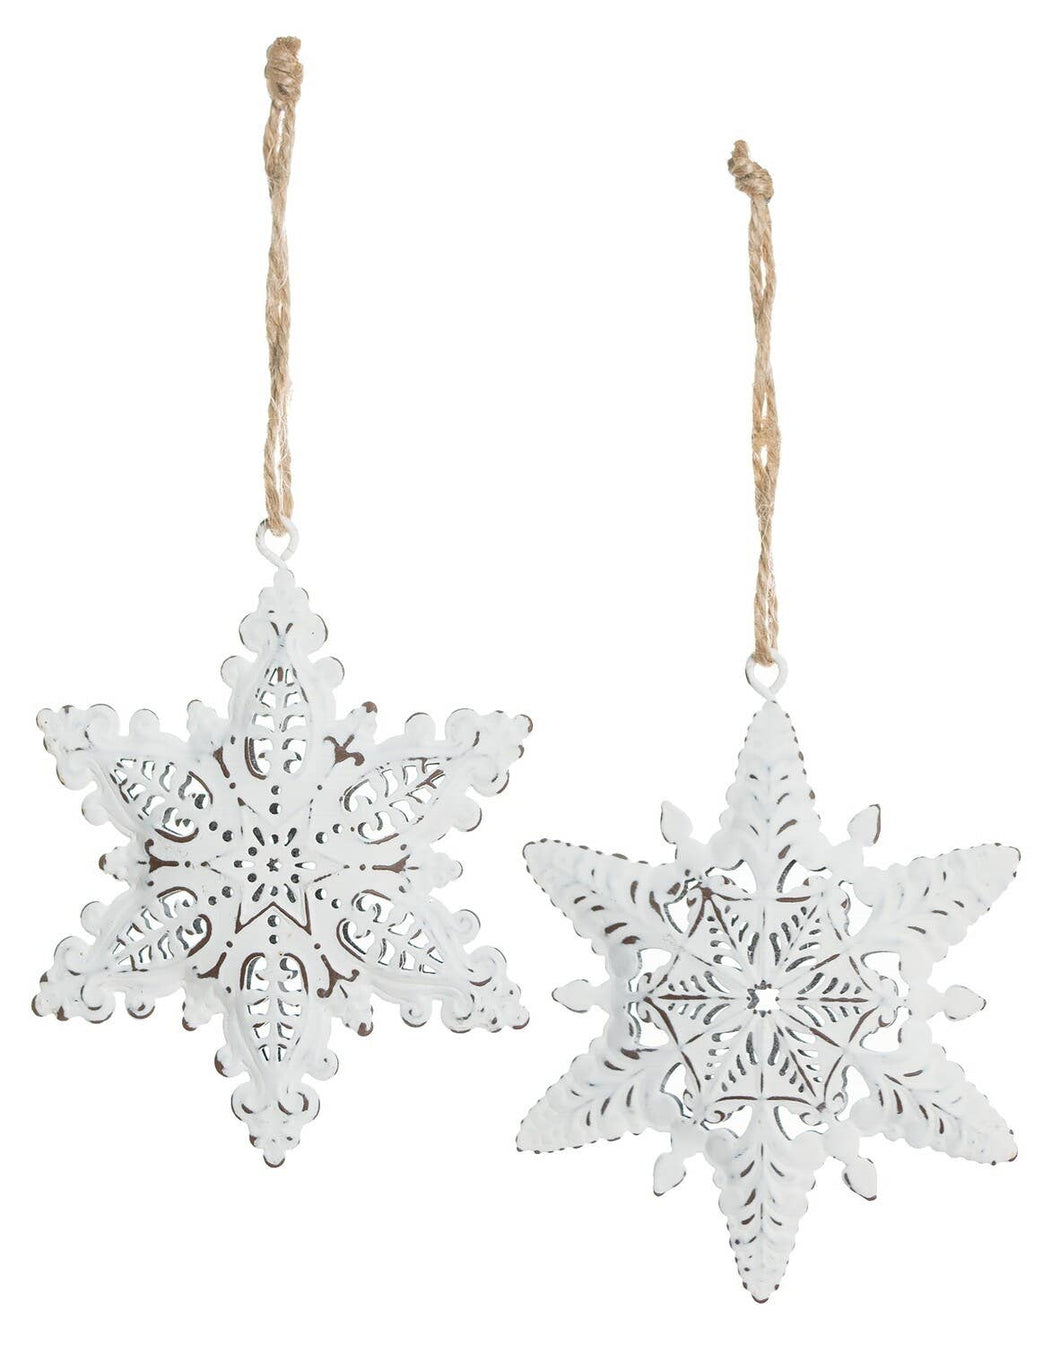 Antique White Snowflake Ornament